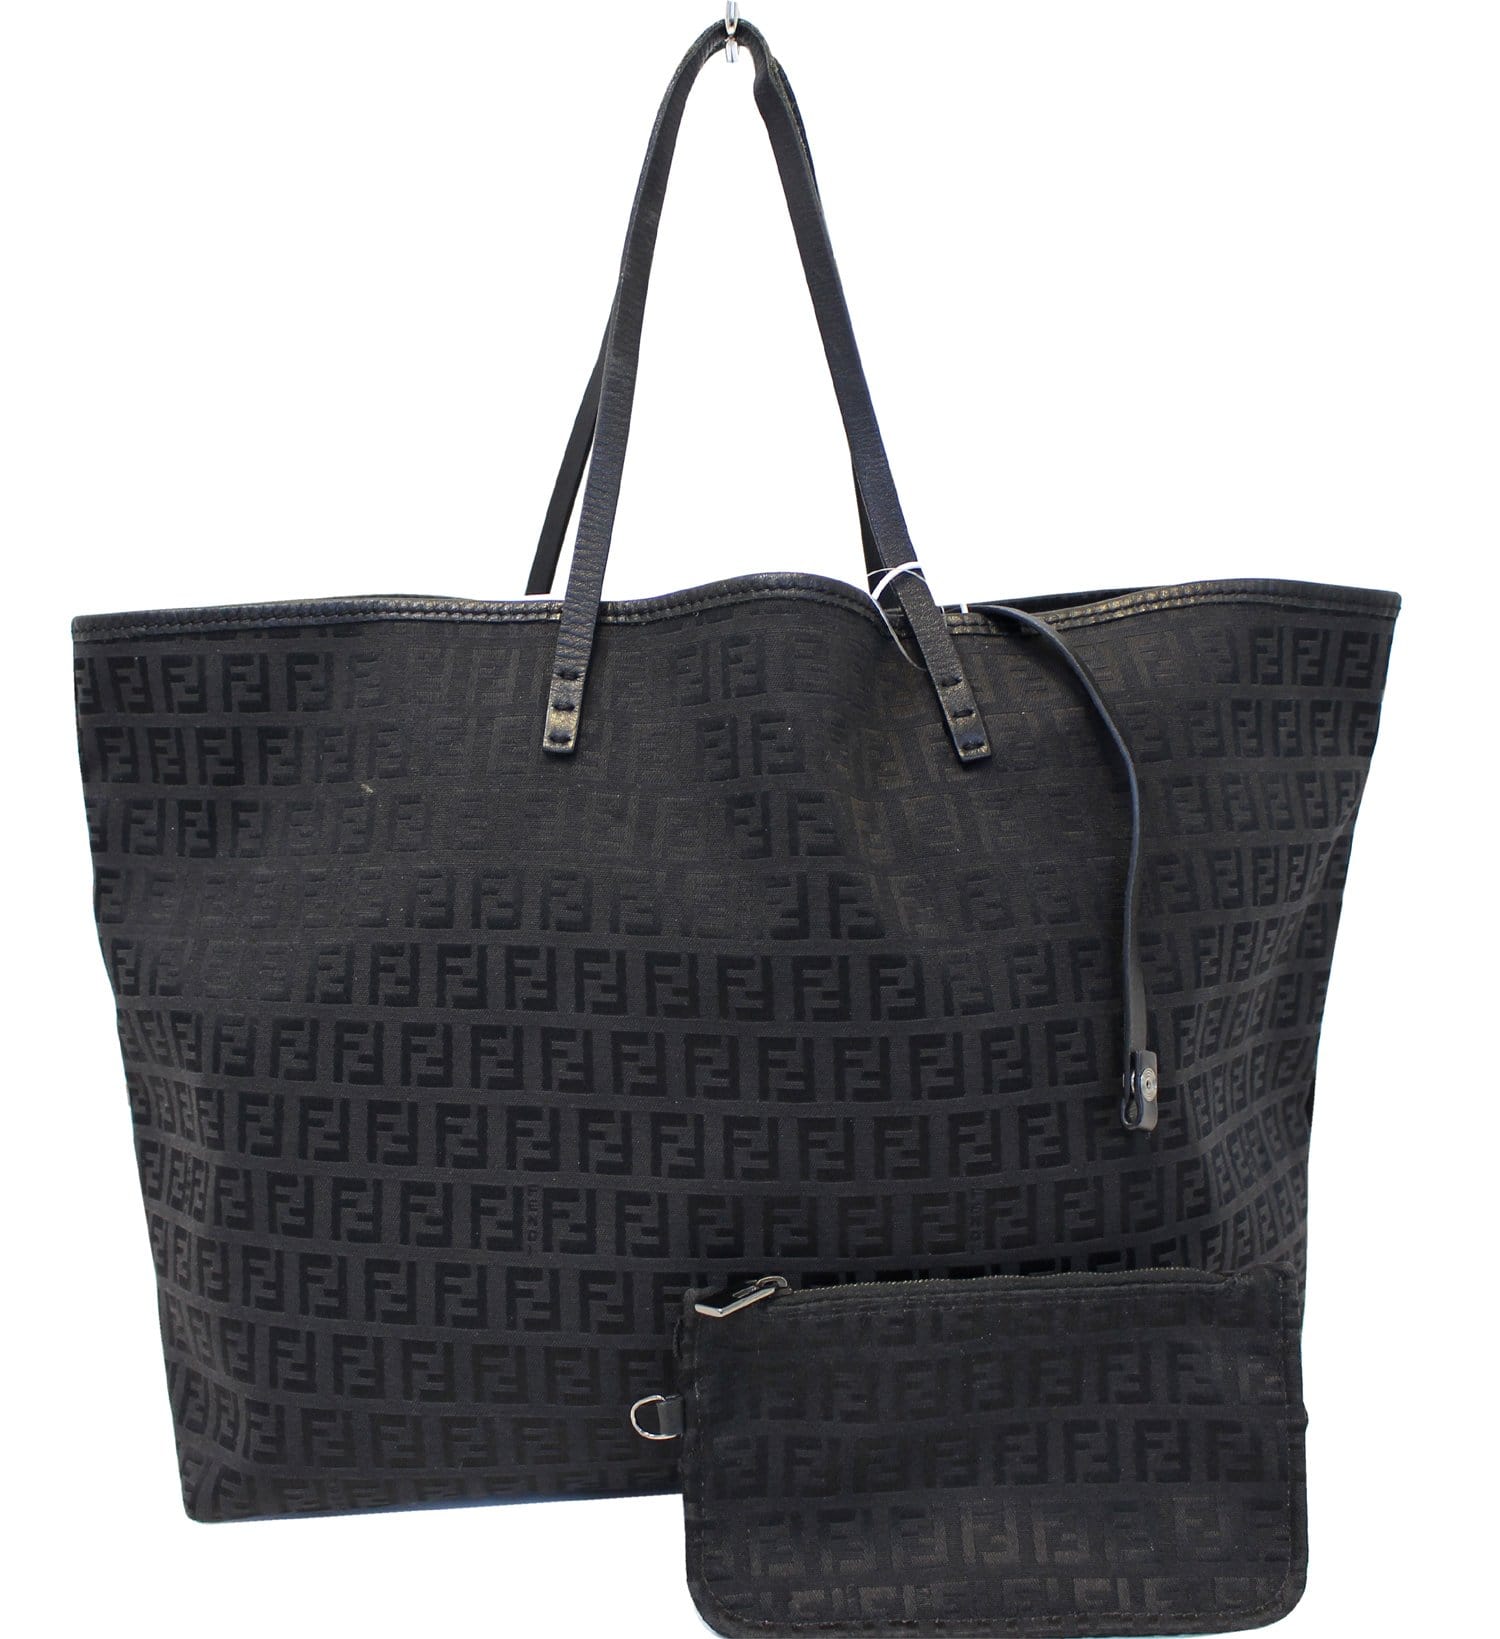 Authentic Fendi Zucca Handbag Top Handle Monogram Leather Canvas